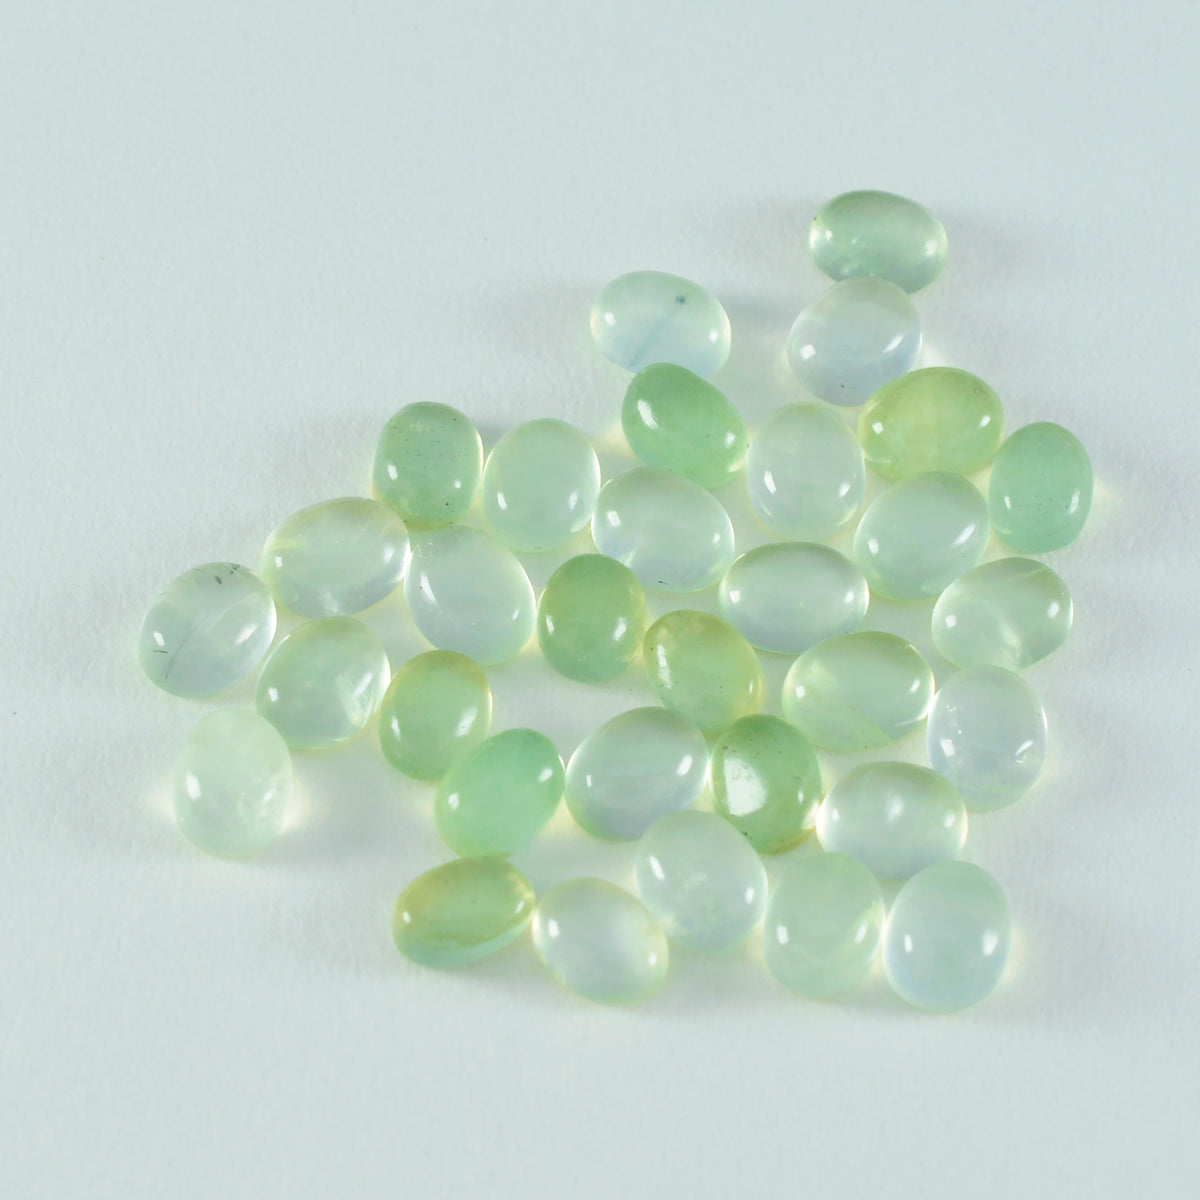 Riyogems 1PC Green Prehnite Cabochon 3x5 mm Oval Shape cute Quality Stone